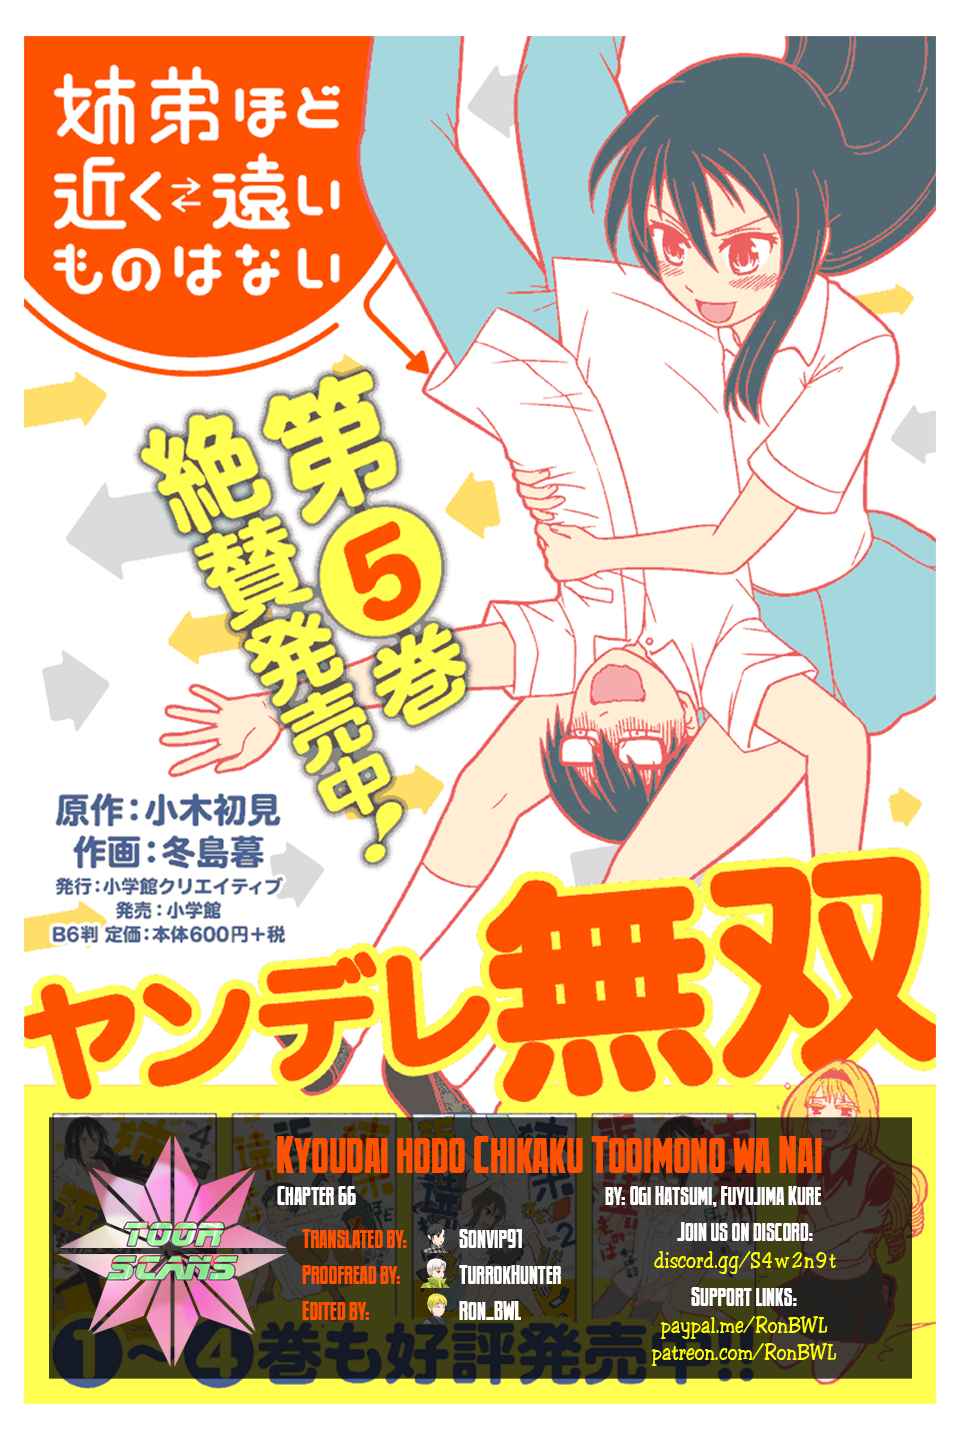 Kyoudai hodo Chikaku Tooimono wa Nai Vol. 5 Ch. 66 Everything's been prepared as Mai chan wants (Part 1)